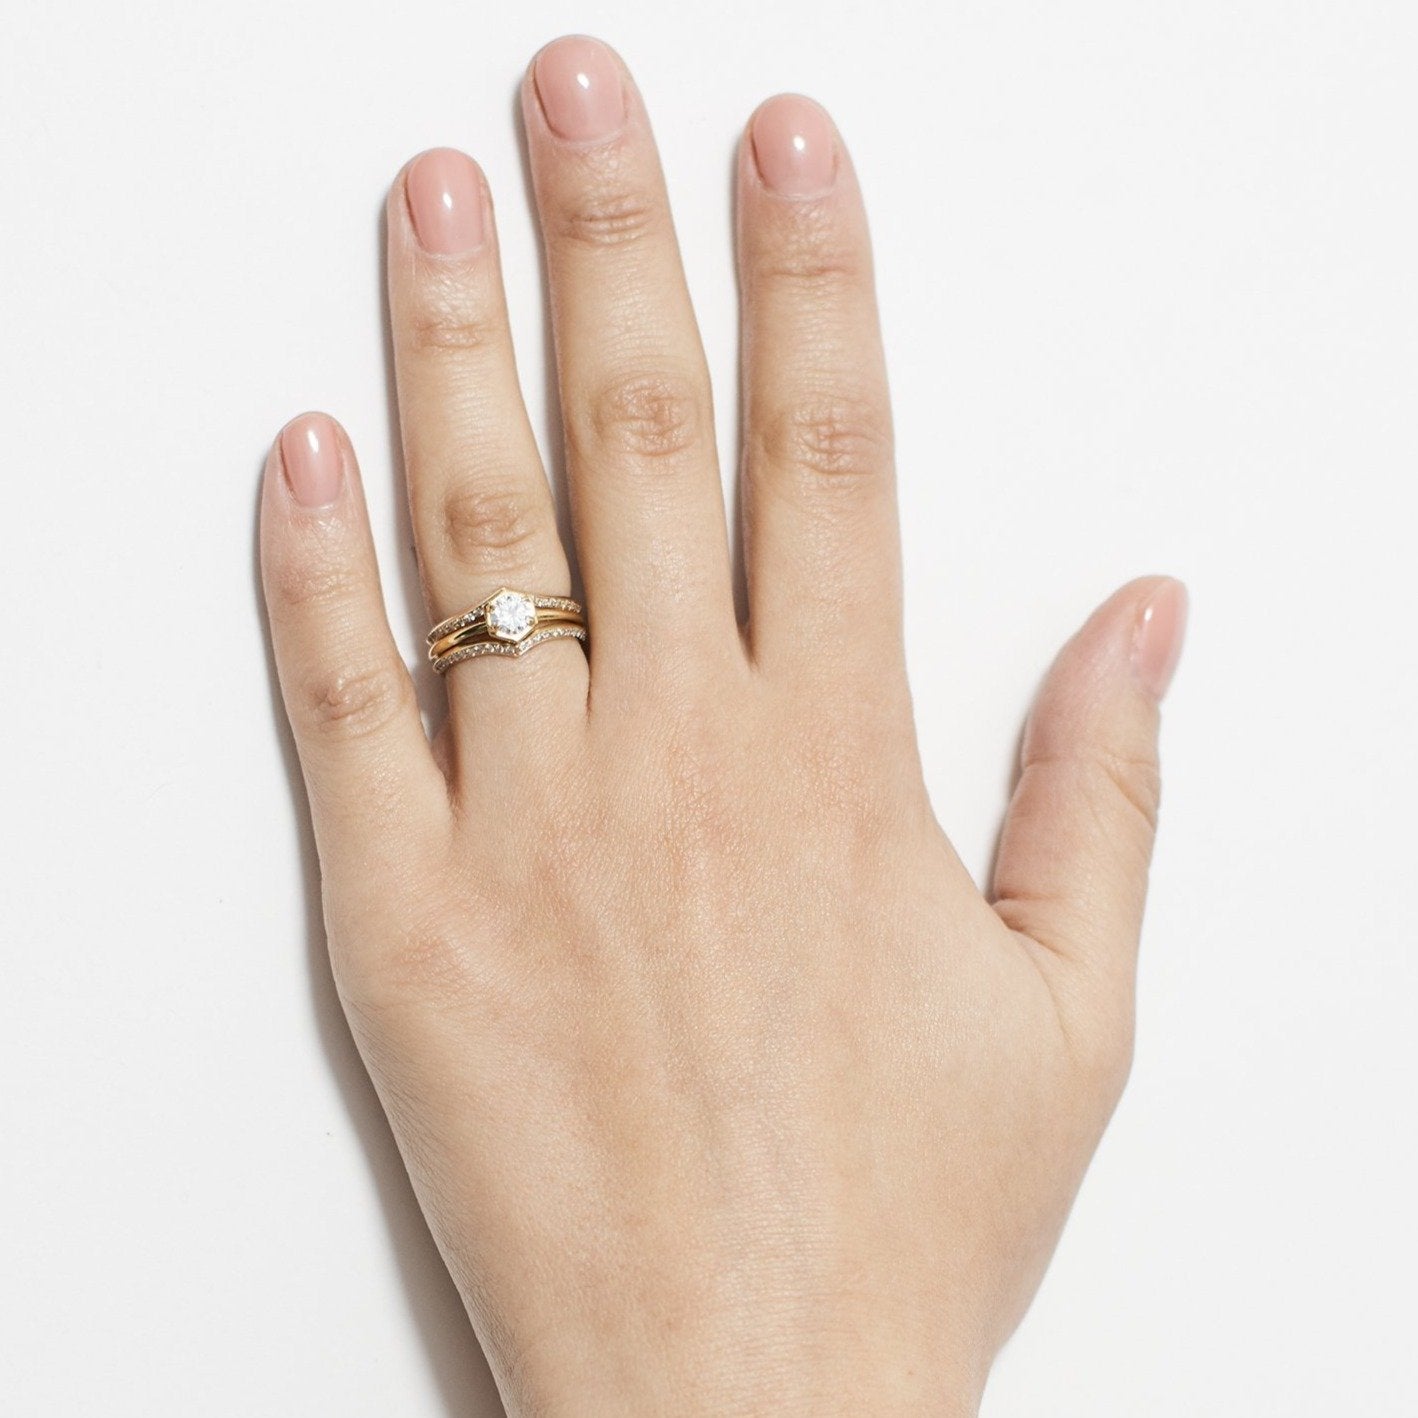 Matching Meteorite Wedding Rings | Jewelry by Johan - Jewelry by Johan